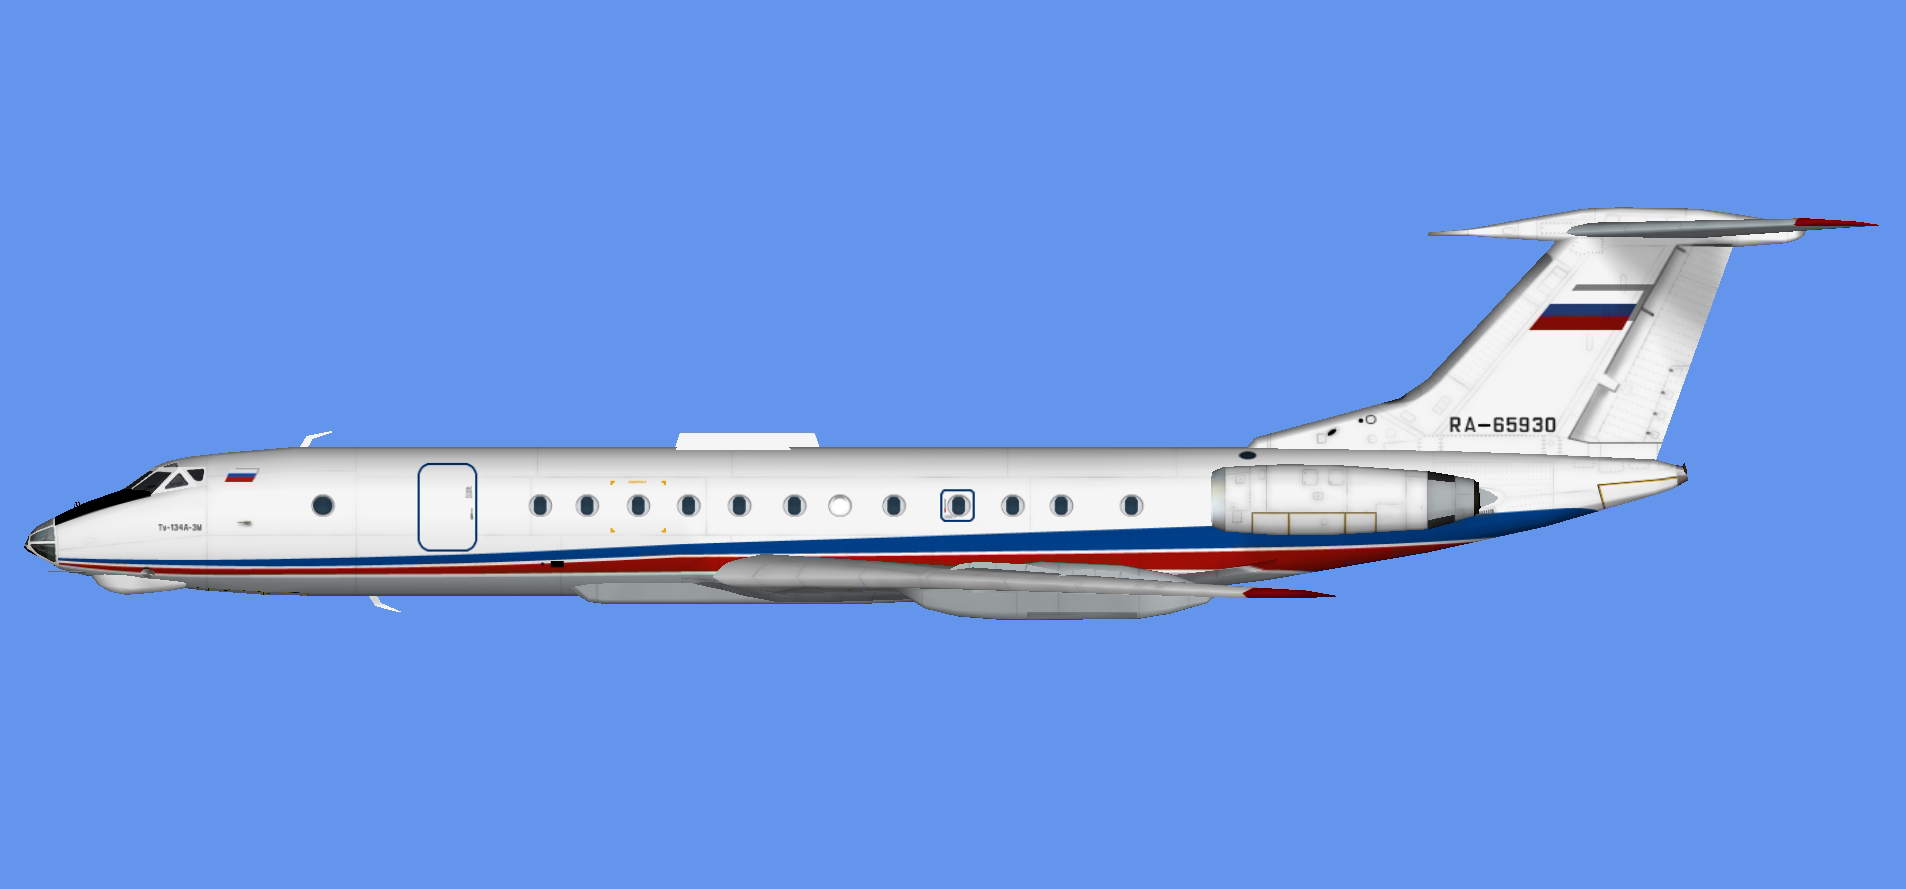 Izhavia Tupolev Tu-134